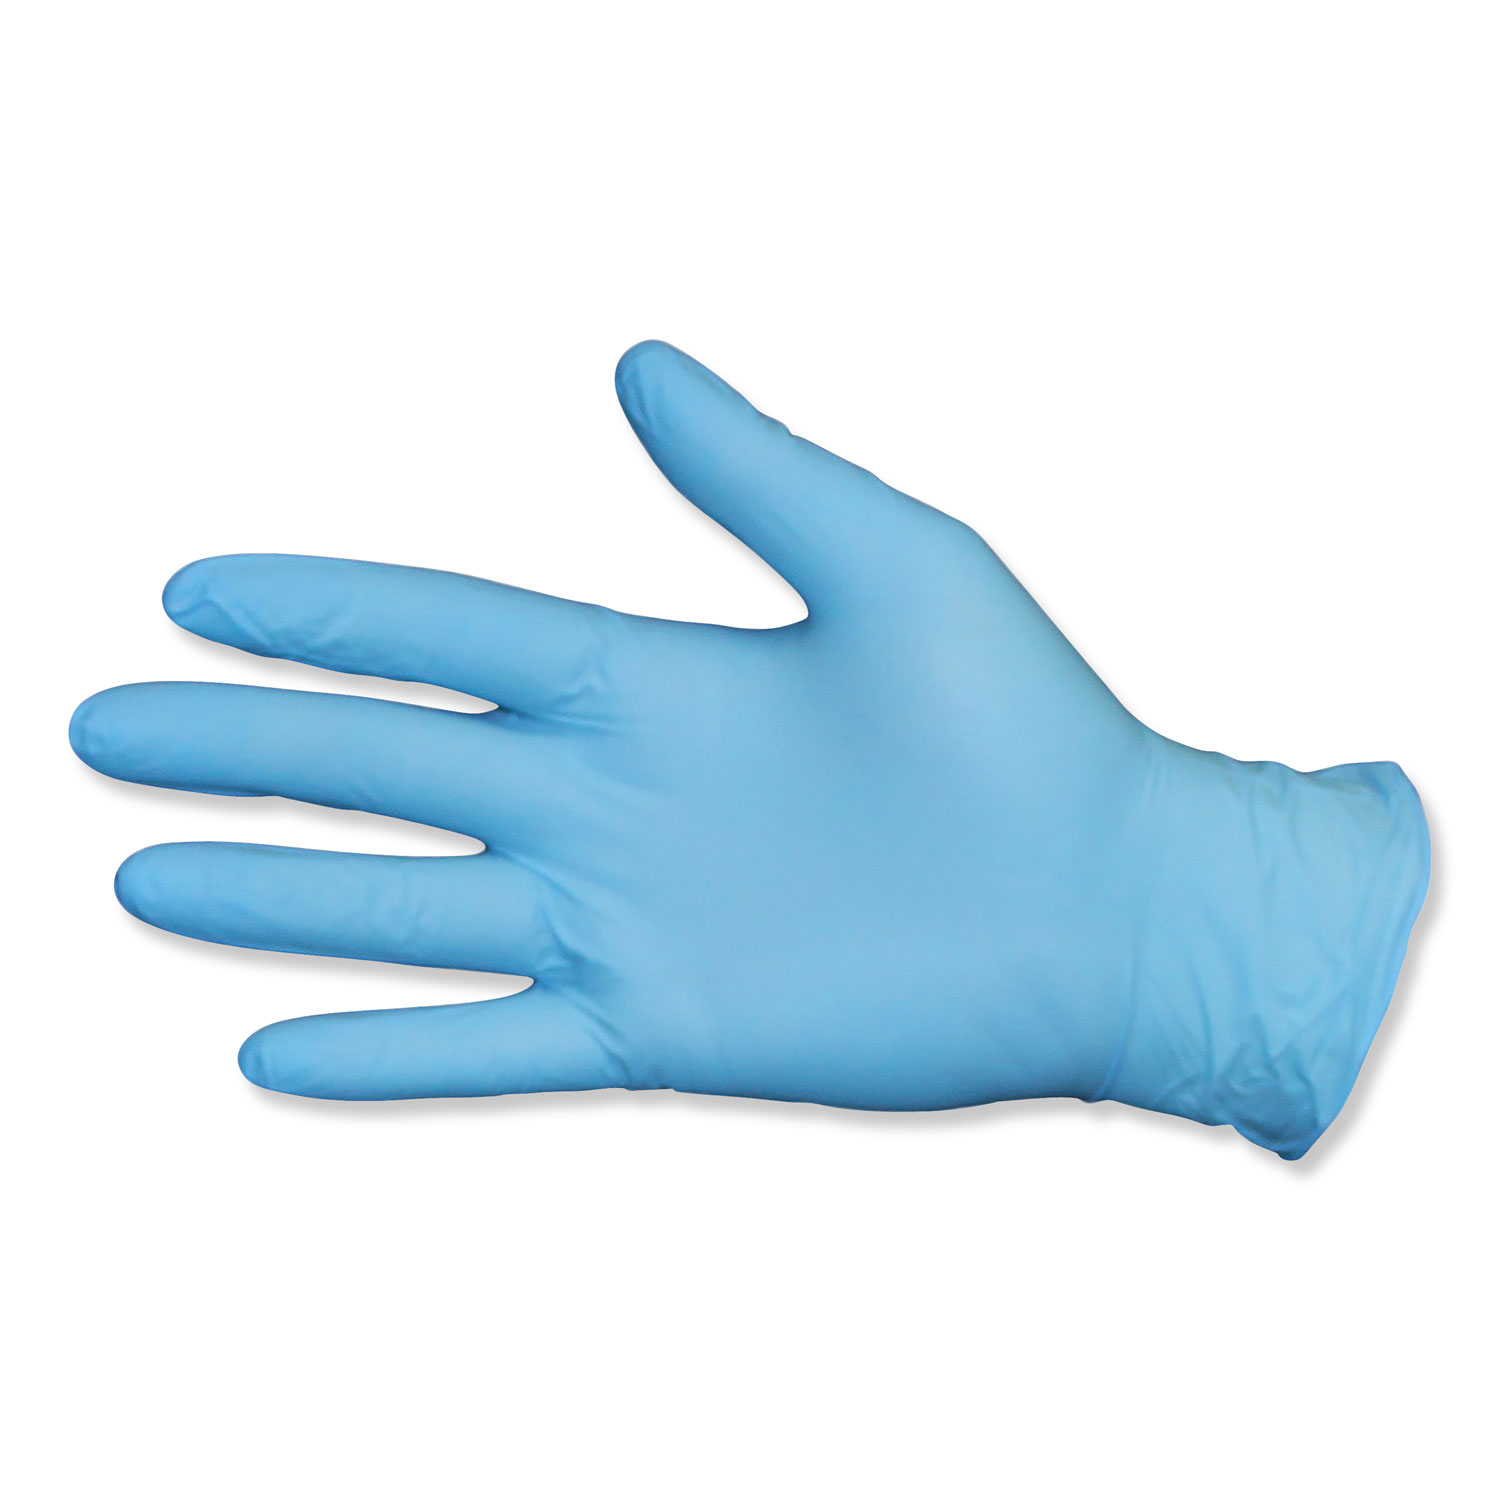  Impact IMP 8644S Pro-Guard Disposable Powder-Free General-Purpose Nitrile Gloves, Blue, Small, 100/Box, 10 Boxes/Carton (IMP8644S) 